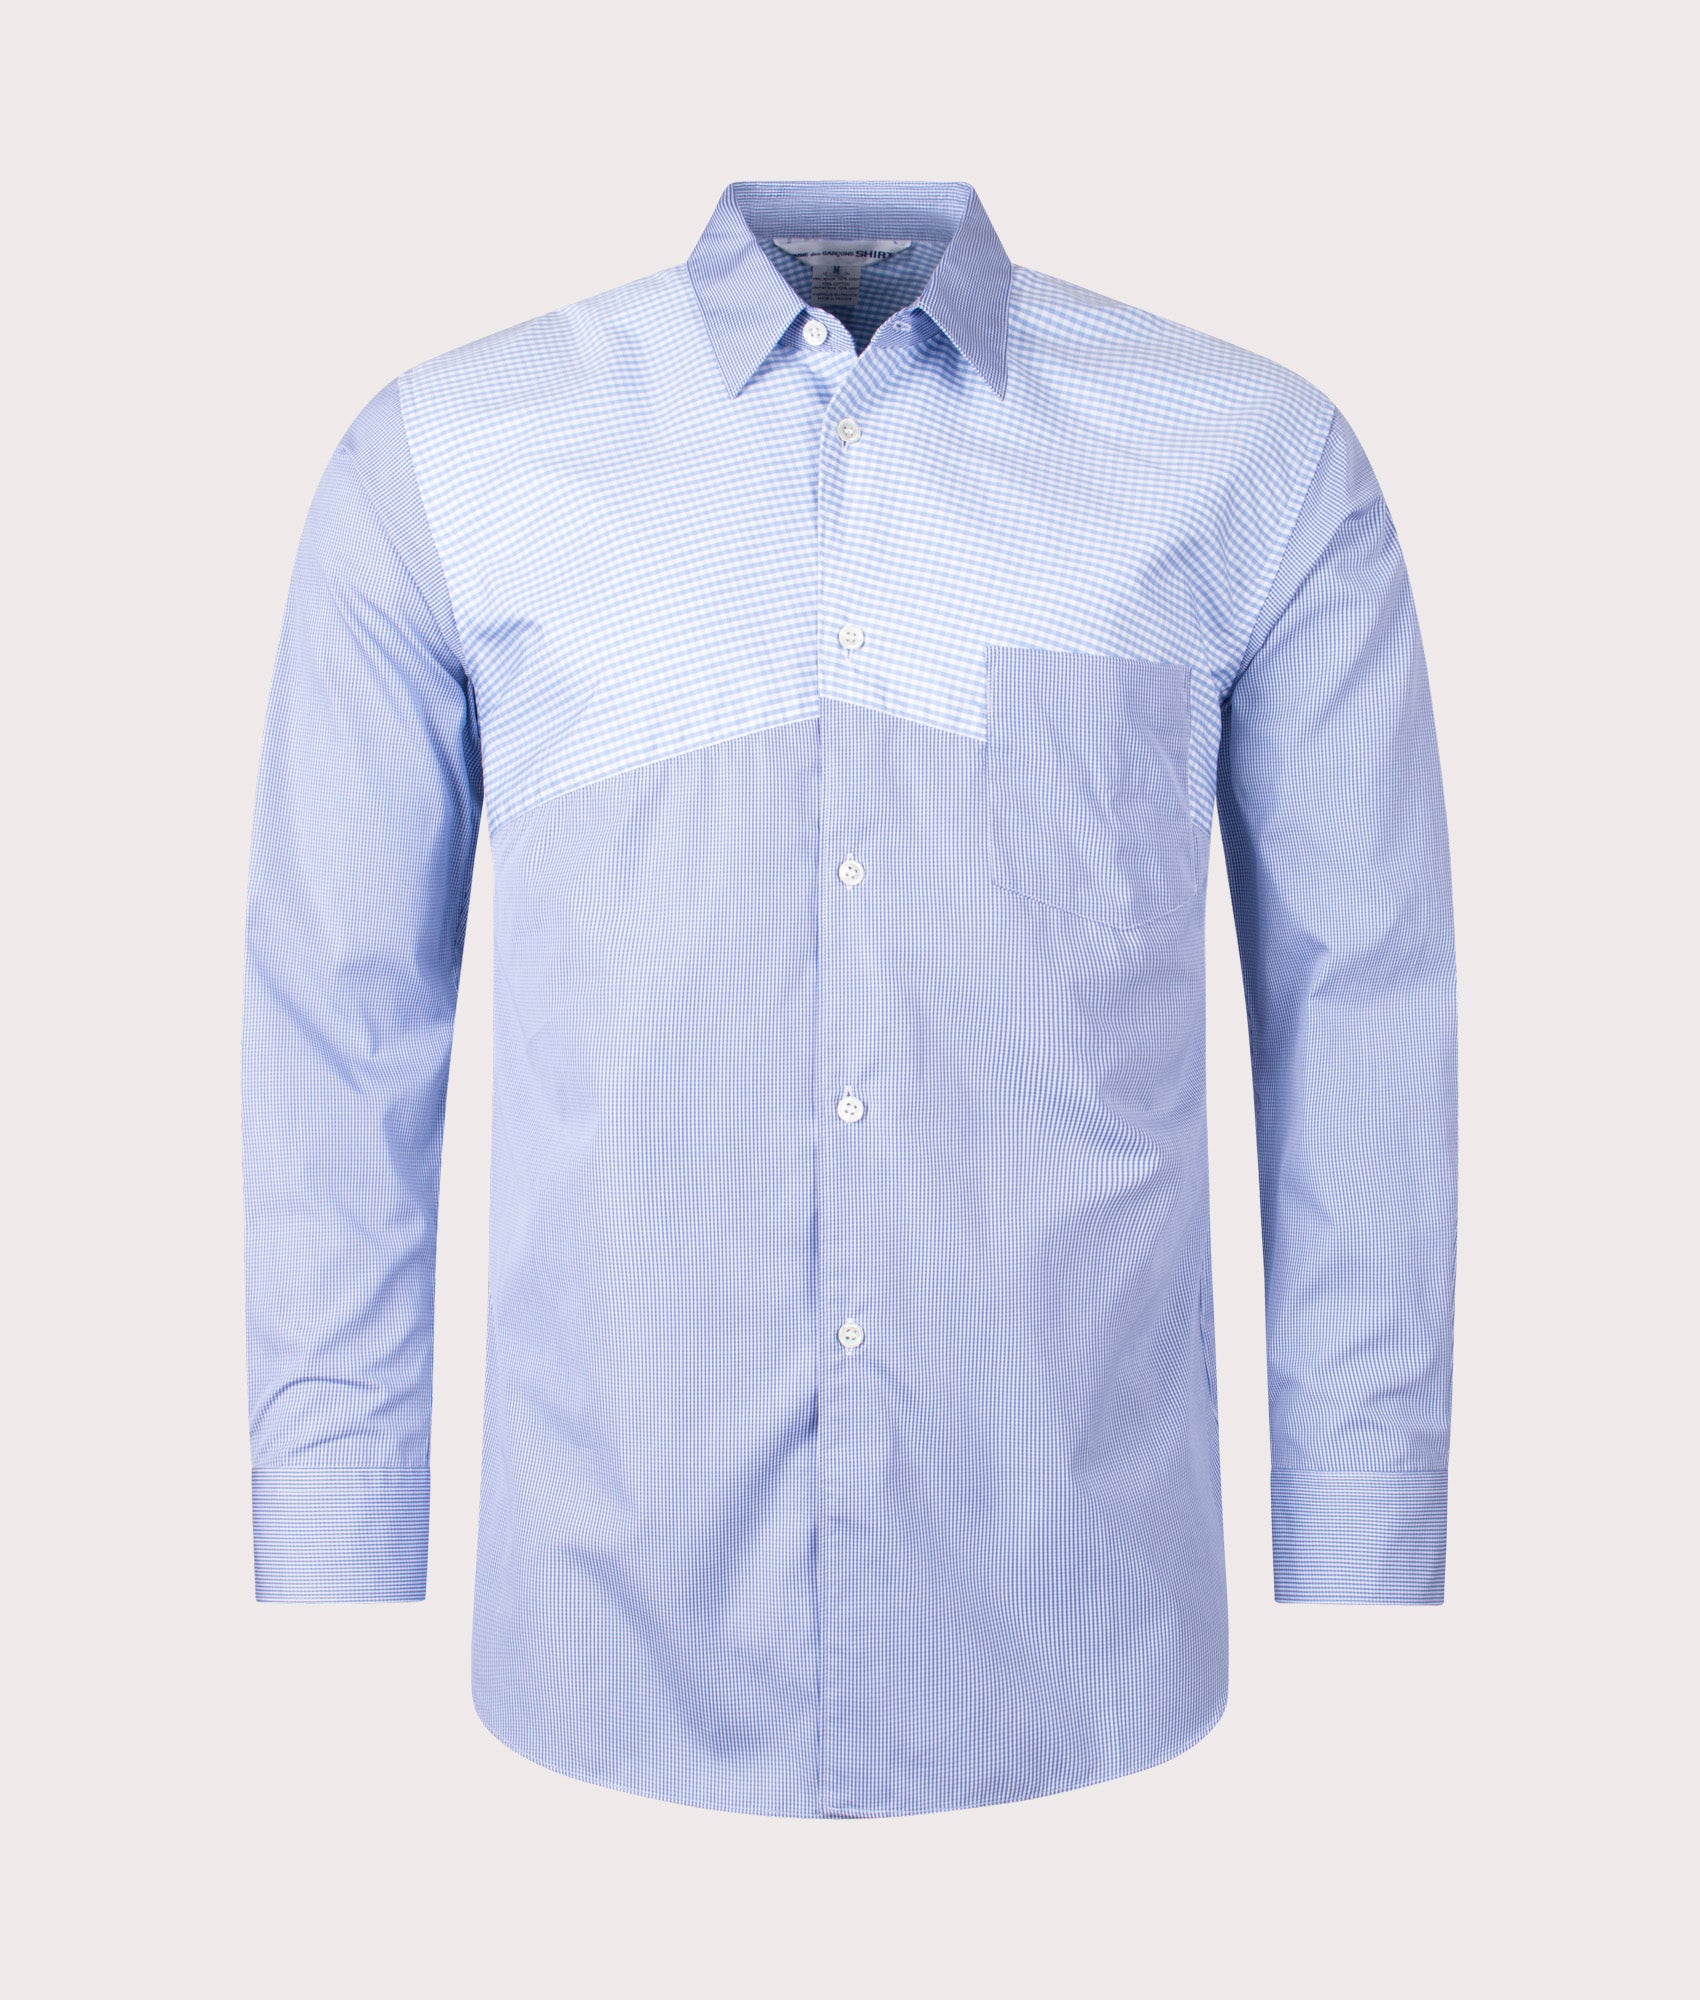 COMME des GARCONS SHIRT Mens Multi Check Shirt - Colour: 1 Check/Check - Size: Medium